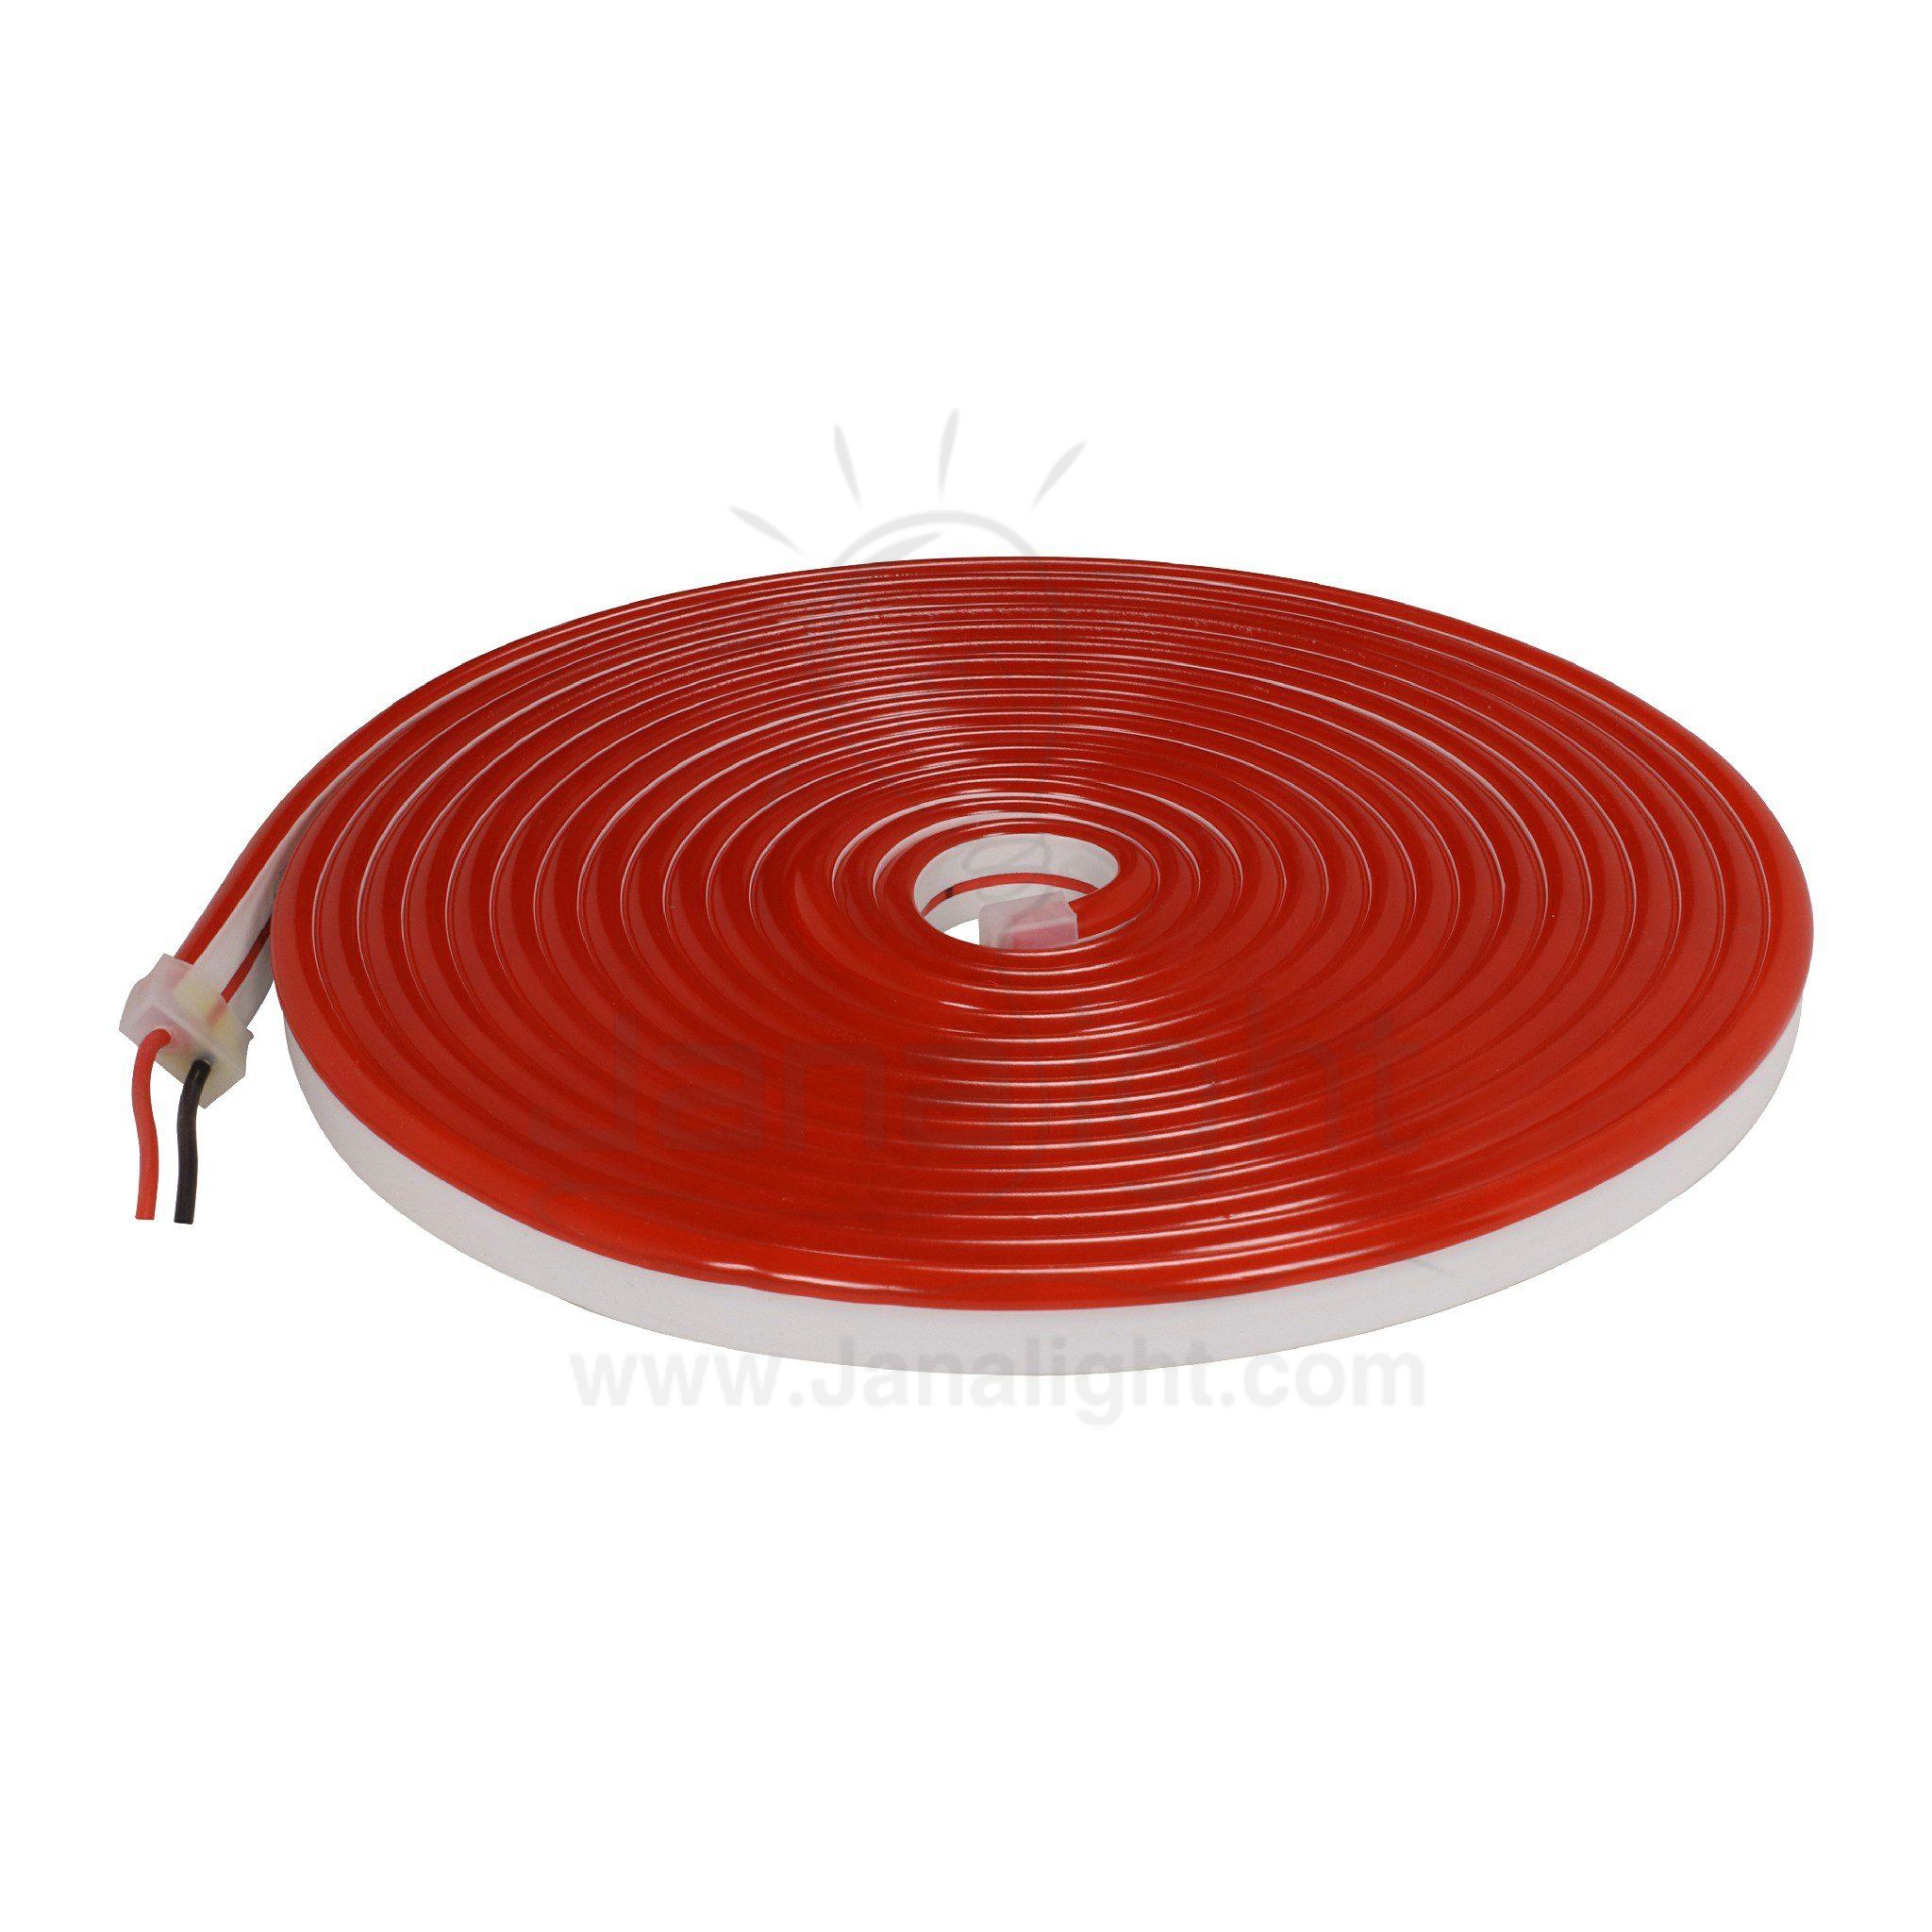 شريط لد اكرليك 12 فولت 5 متر احمر led tabe acrylic 12v 5m red